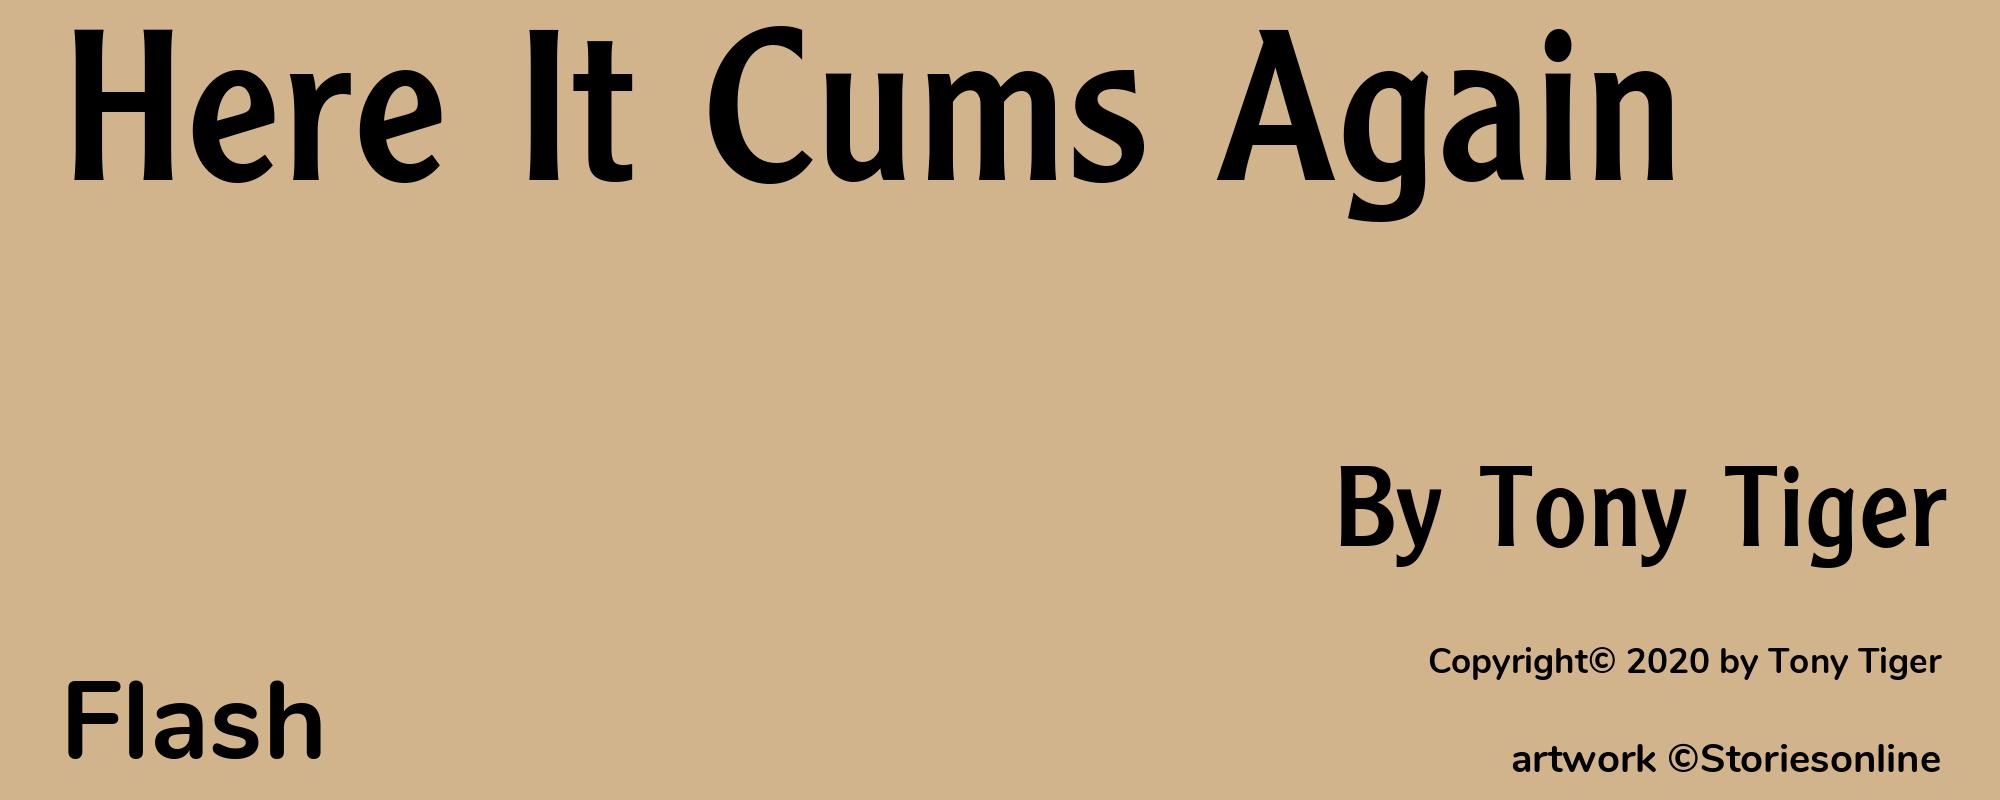 Here It Cums Again - Cover